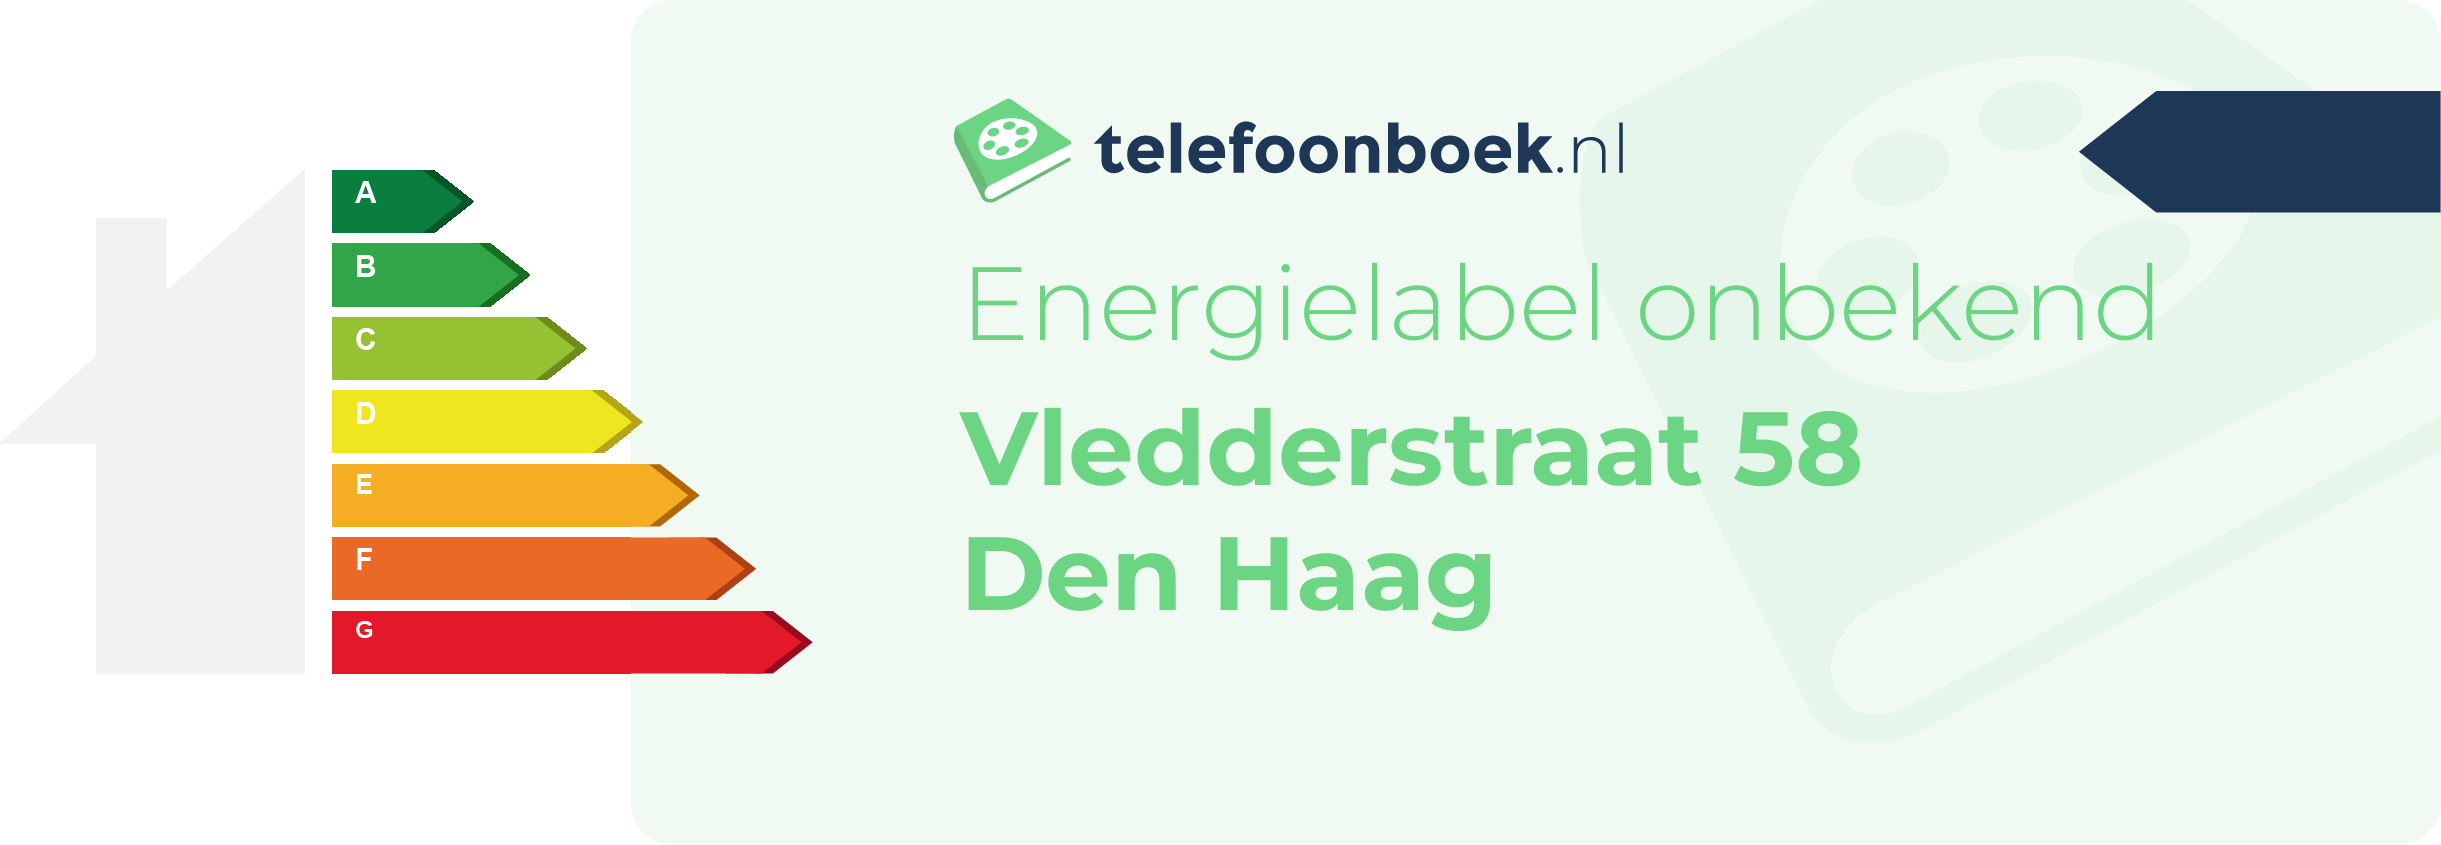 Energielabel Vledderstraat 58 Den Haag